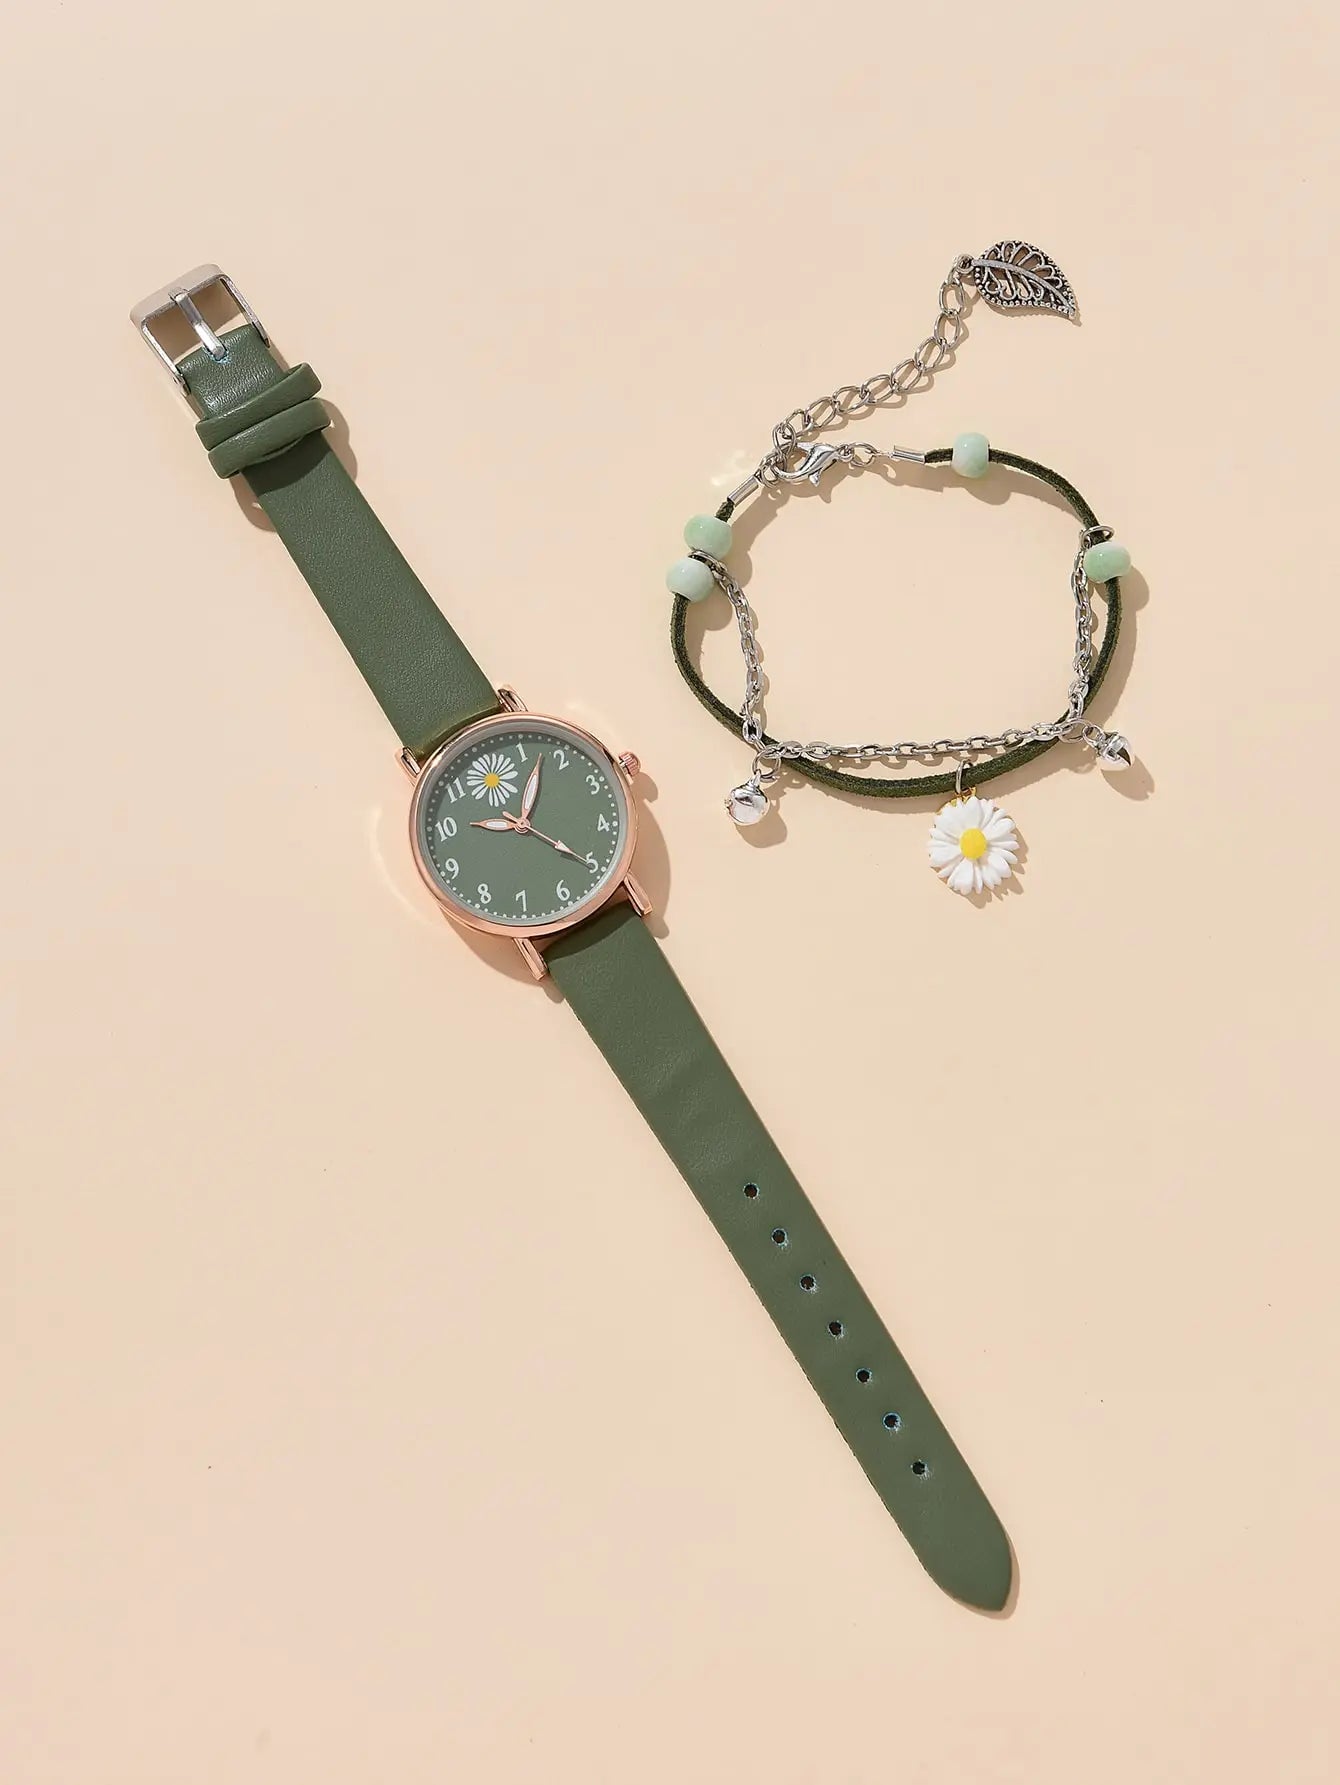 New Watch for Women Dress Romantic Bracelet WristWatch Fashion Ladies Leather Quartz Watch Clock Women Montre Femme